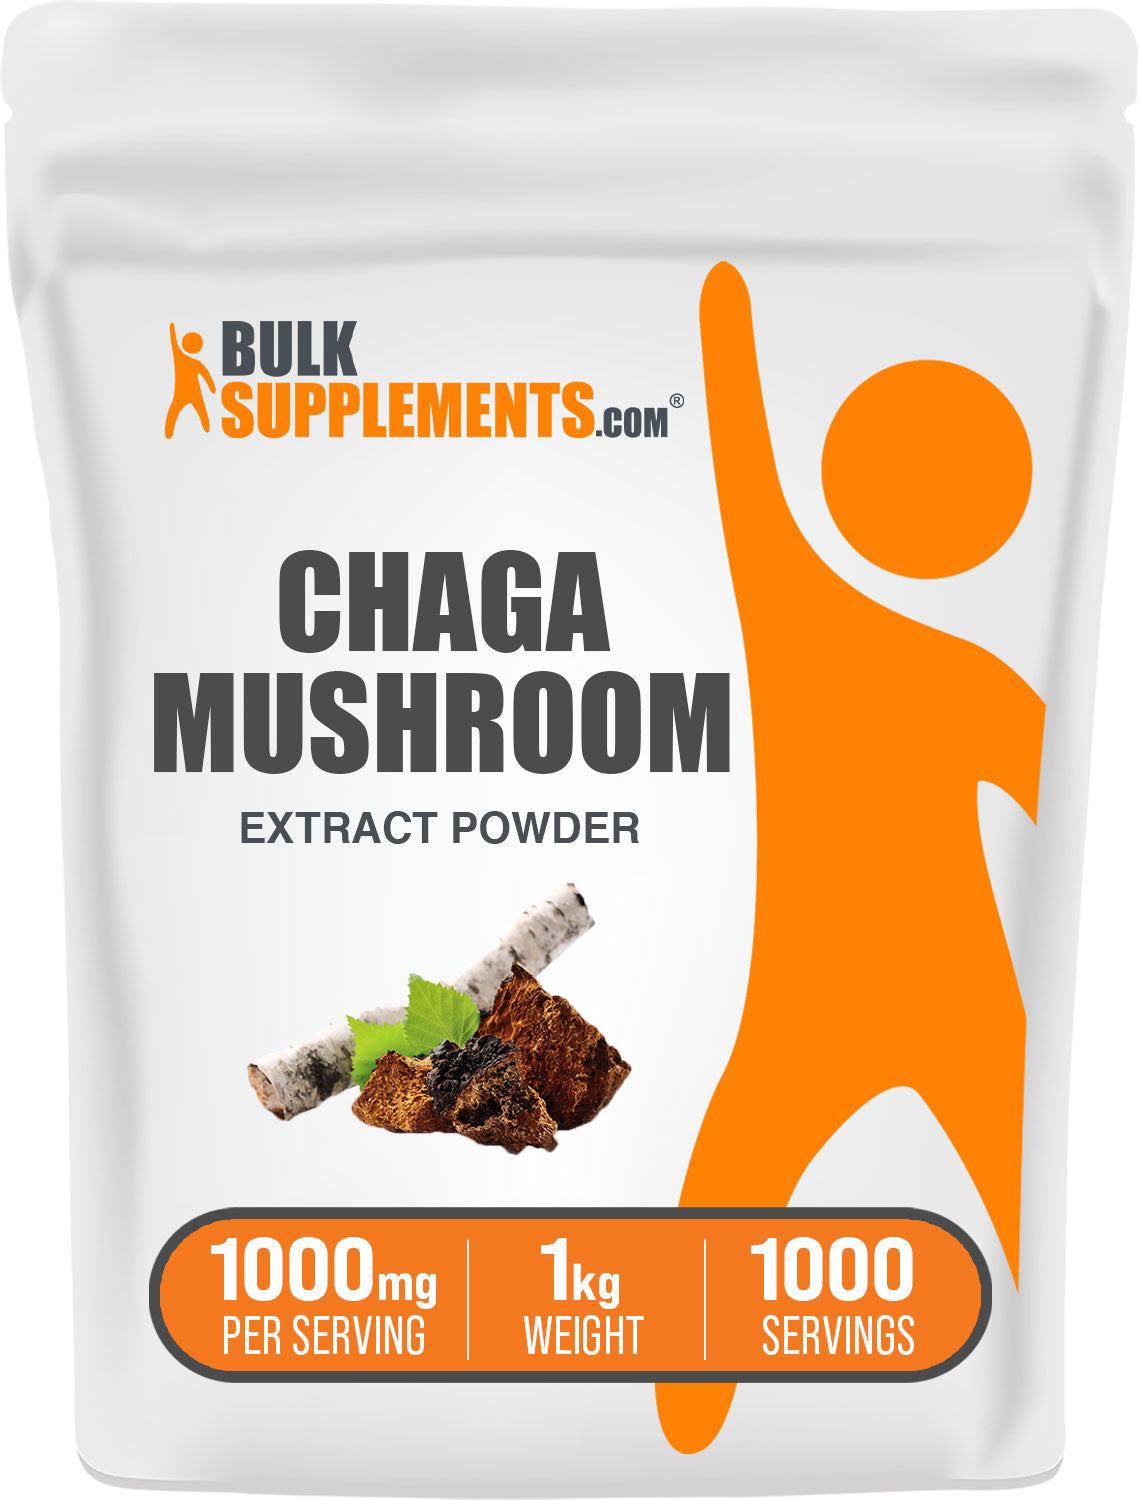 1kg of chaga mushroom supplement